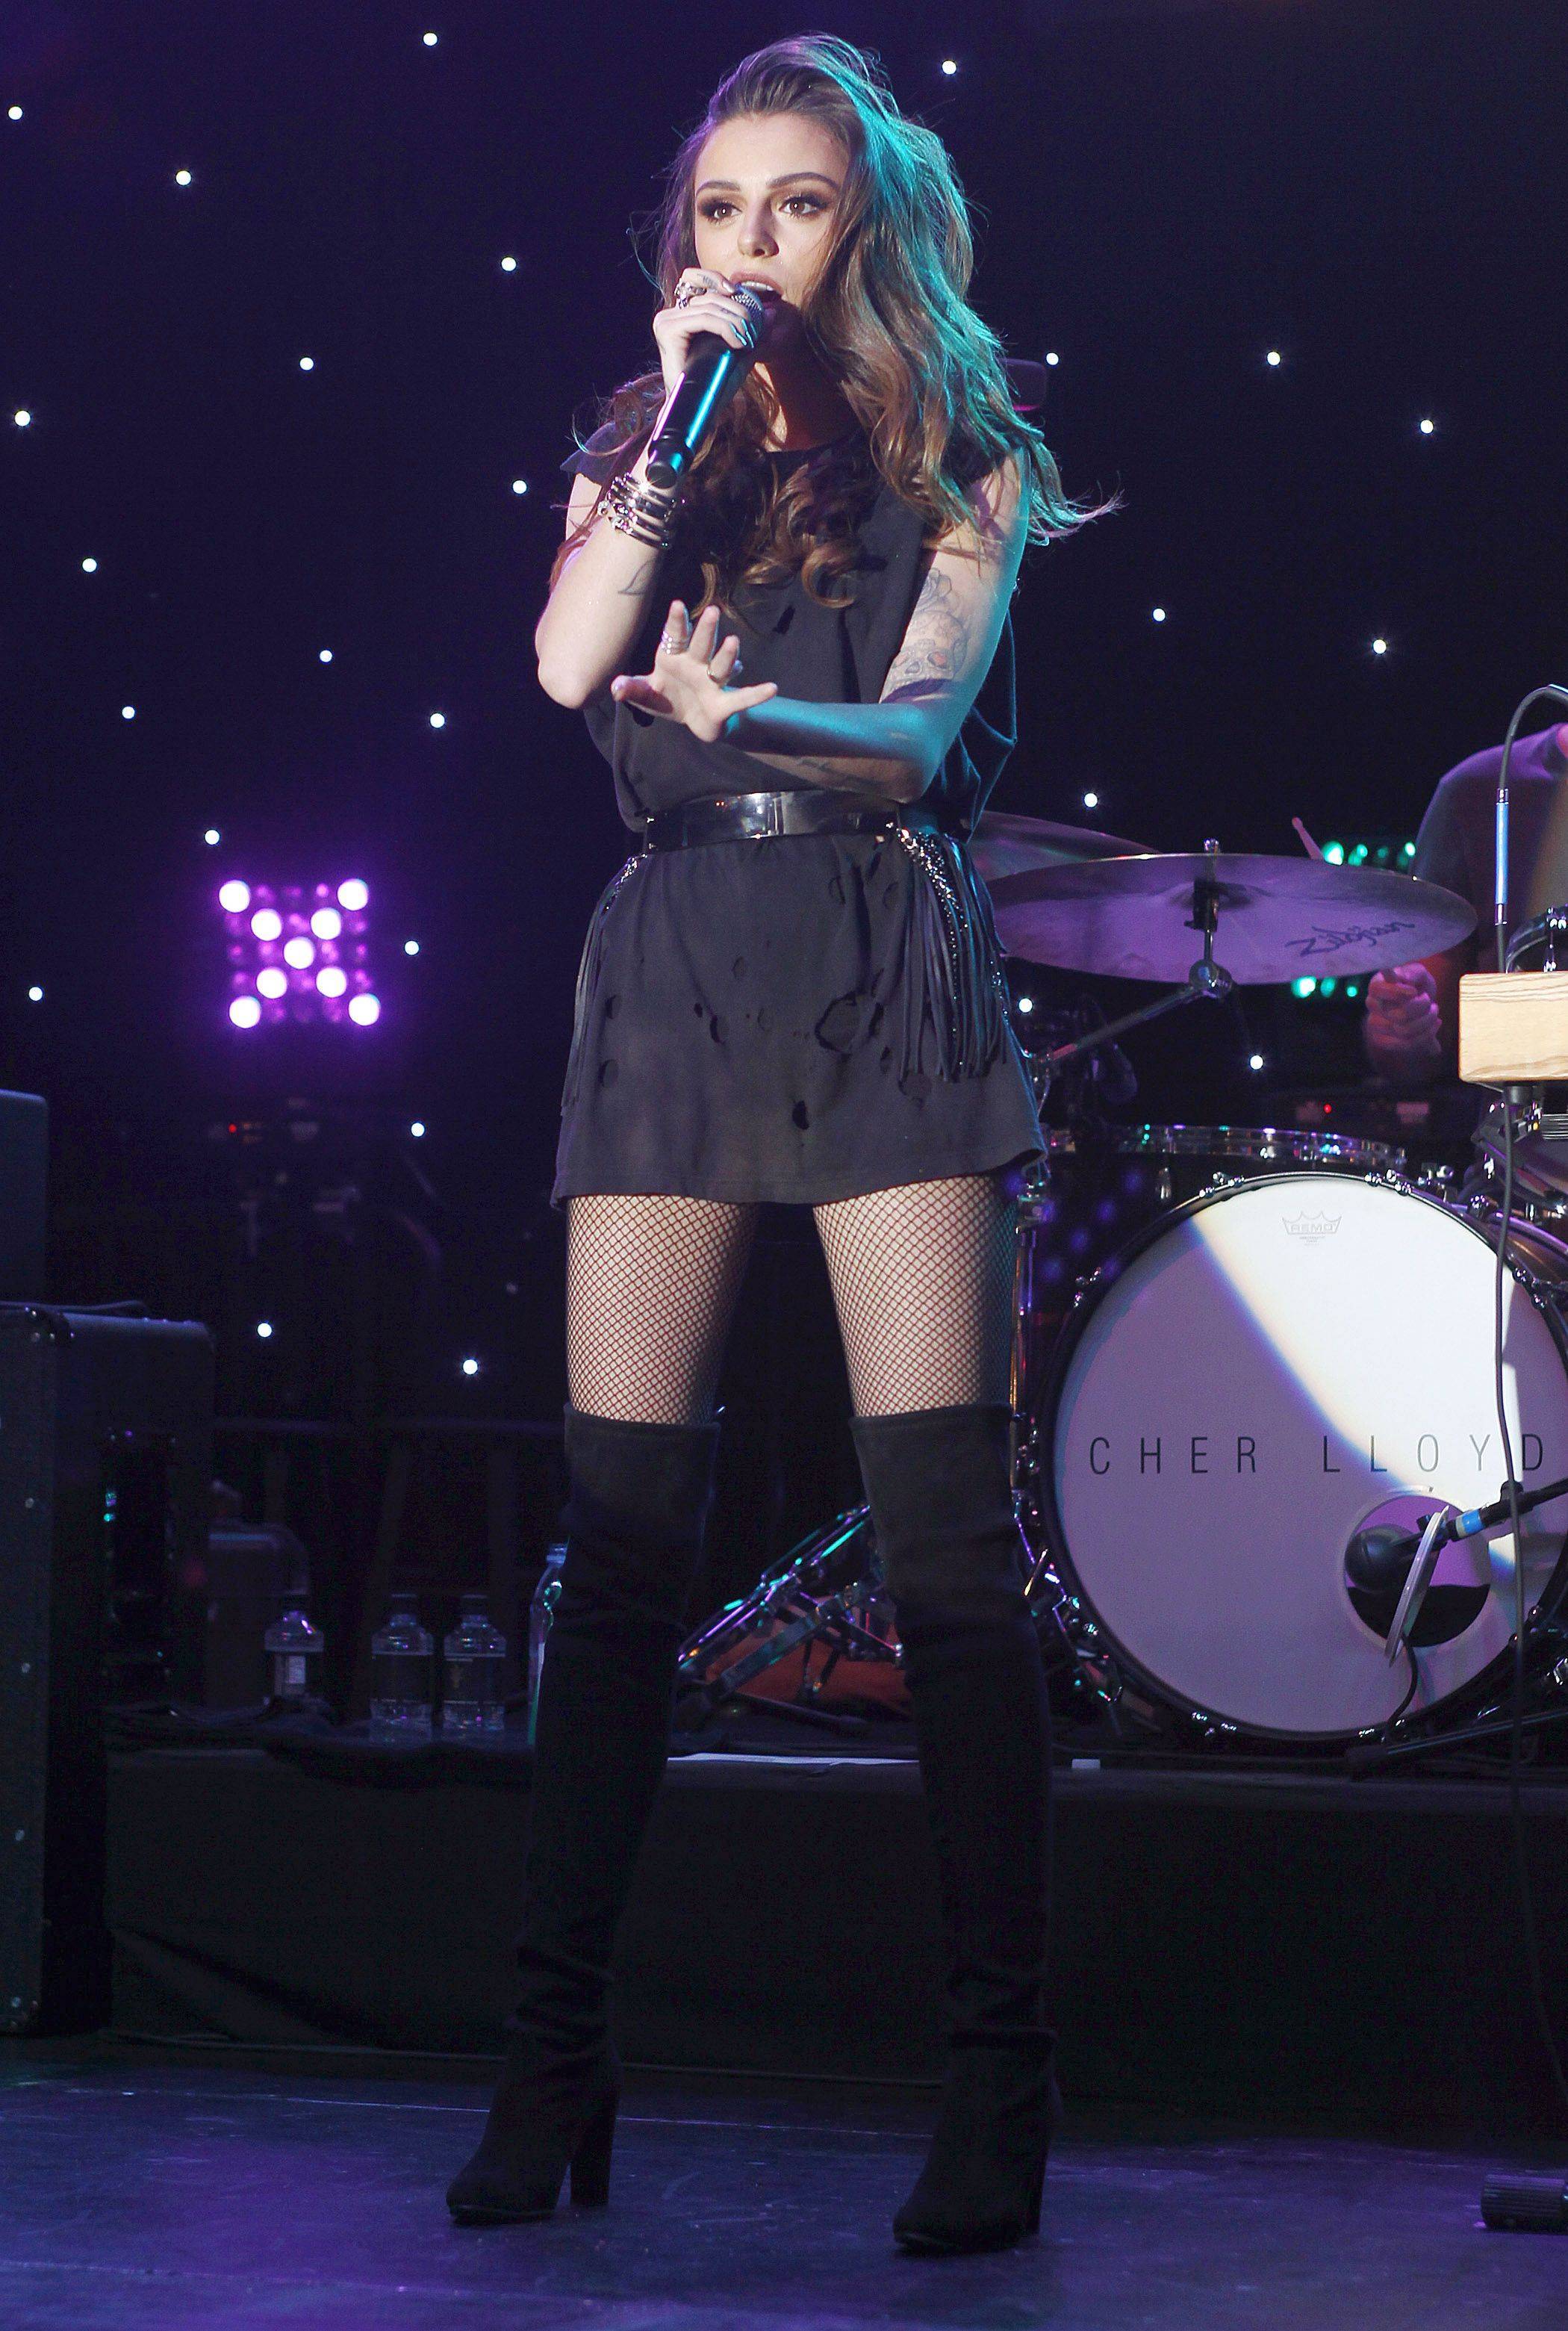 Cher_Lloyd_010.jpg